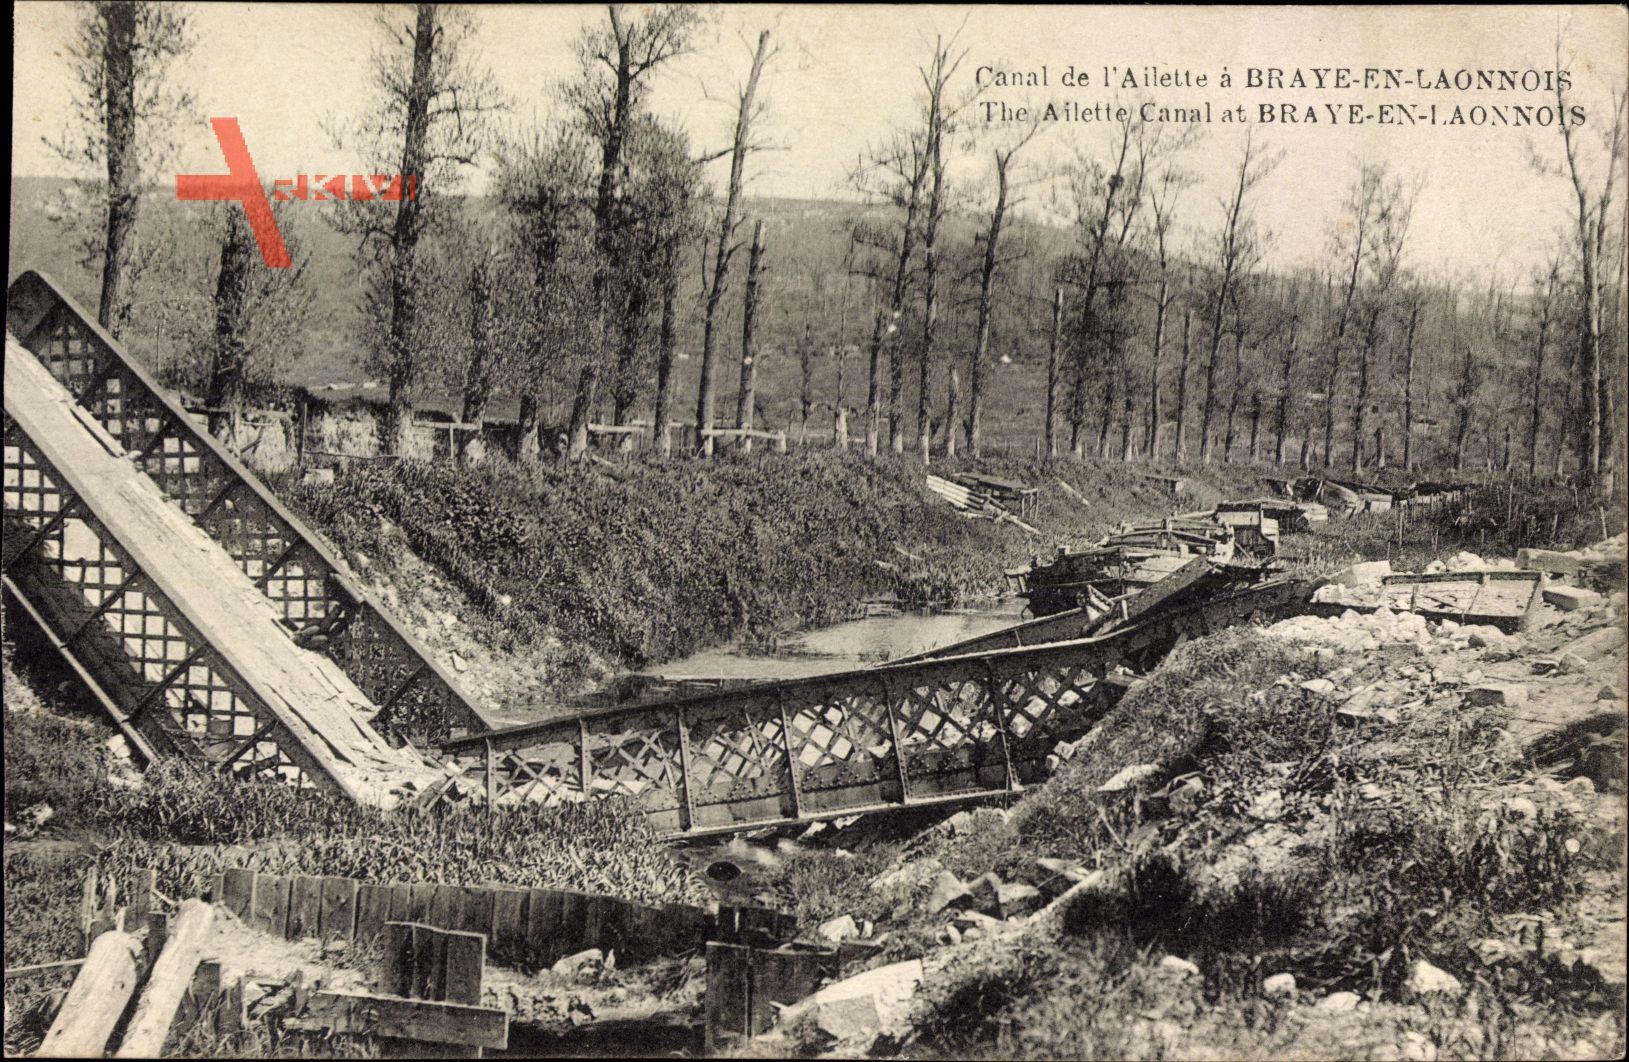 Braye en Laonnois Aisne, Canal de l'Ailette, zerstörte Brücke, Kanal